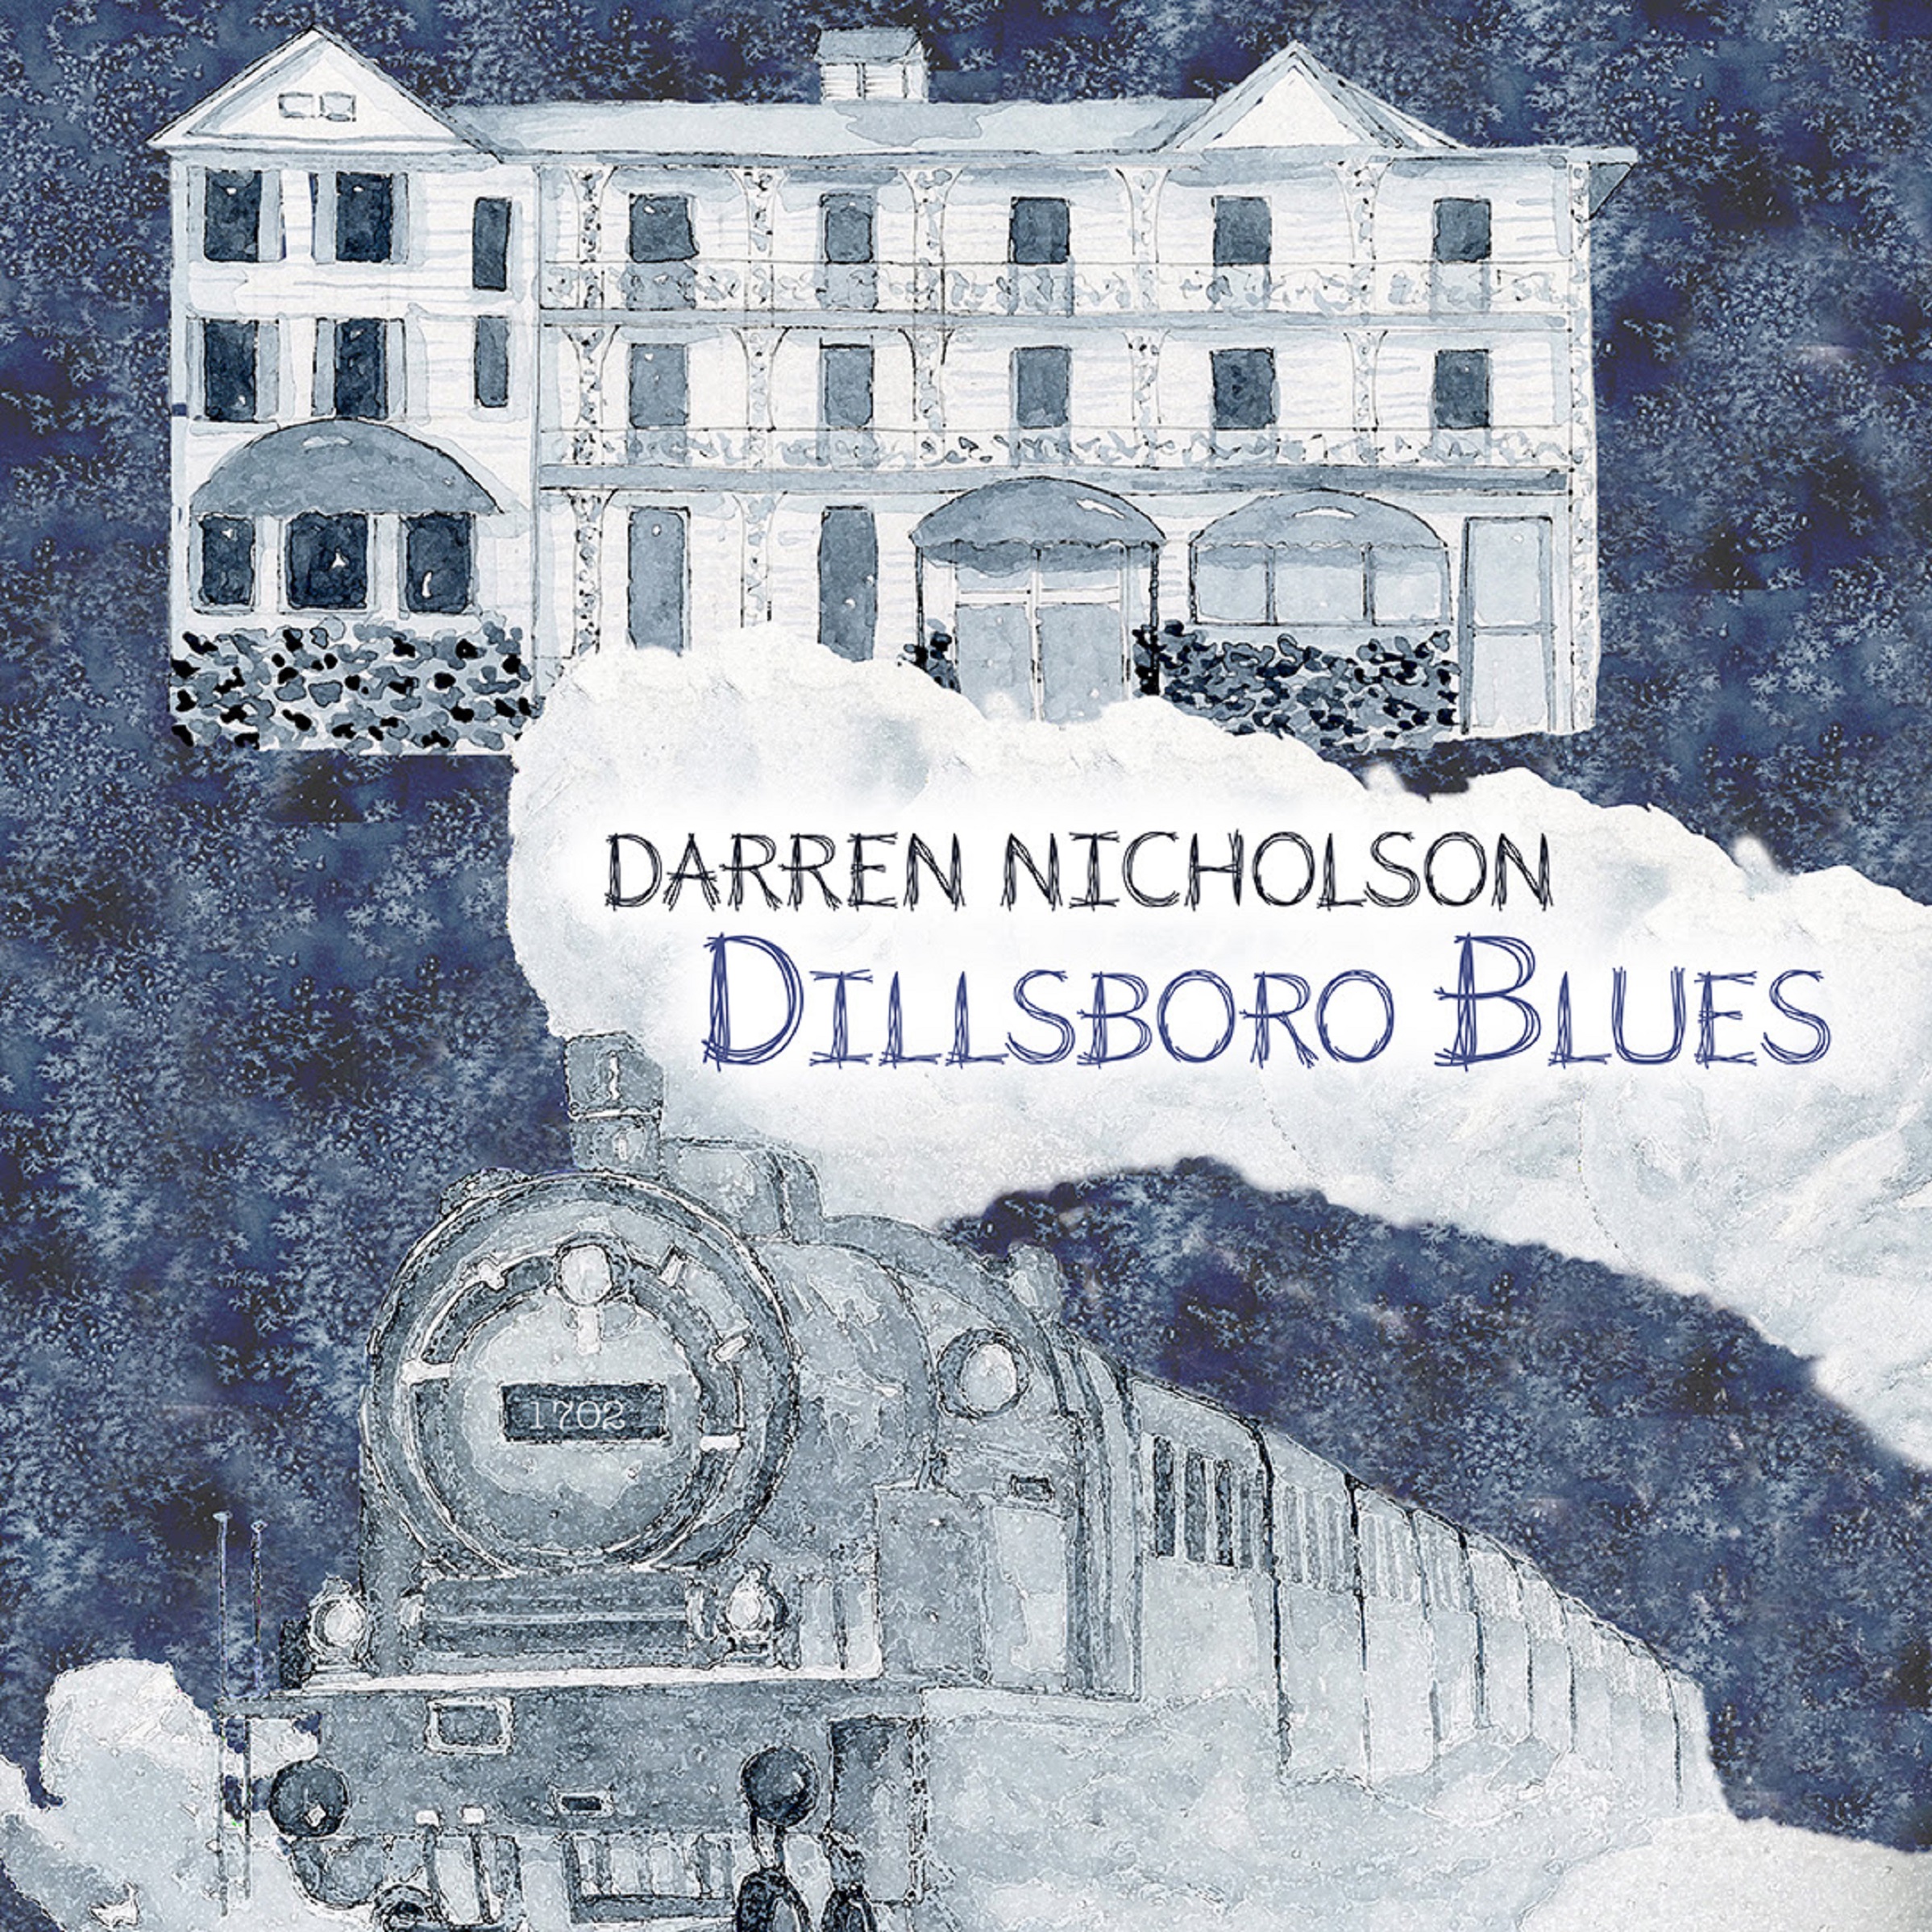 Darren Nicholson’s instrumental “Dillsboro Blues” captures the ups and downs of life